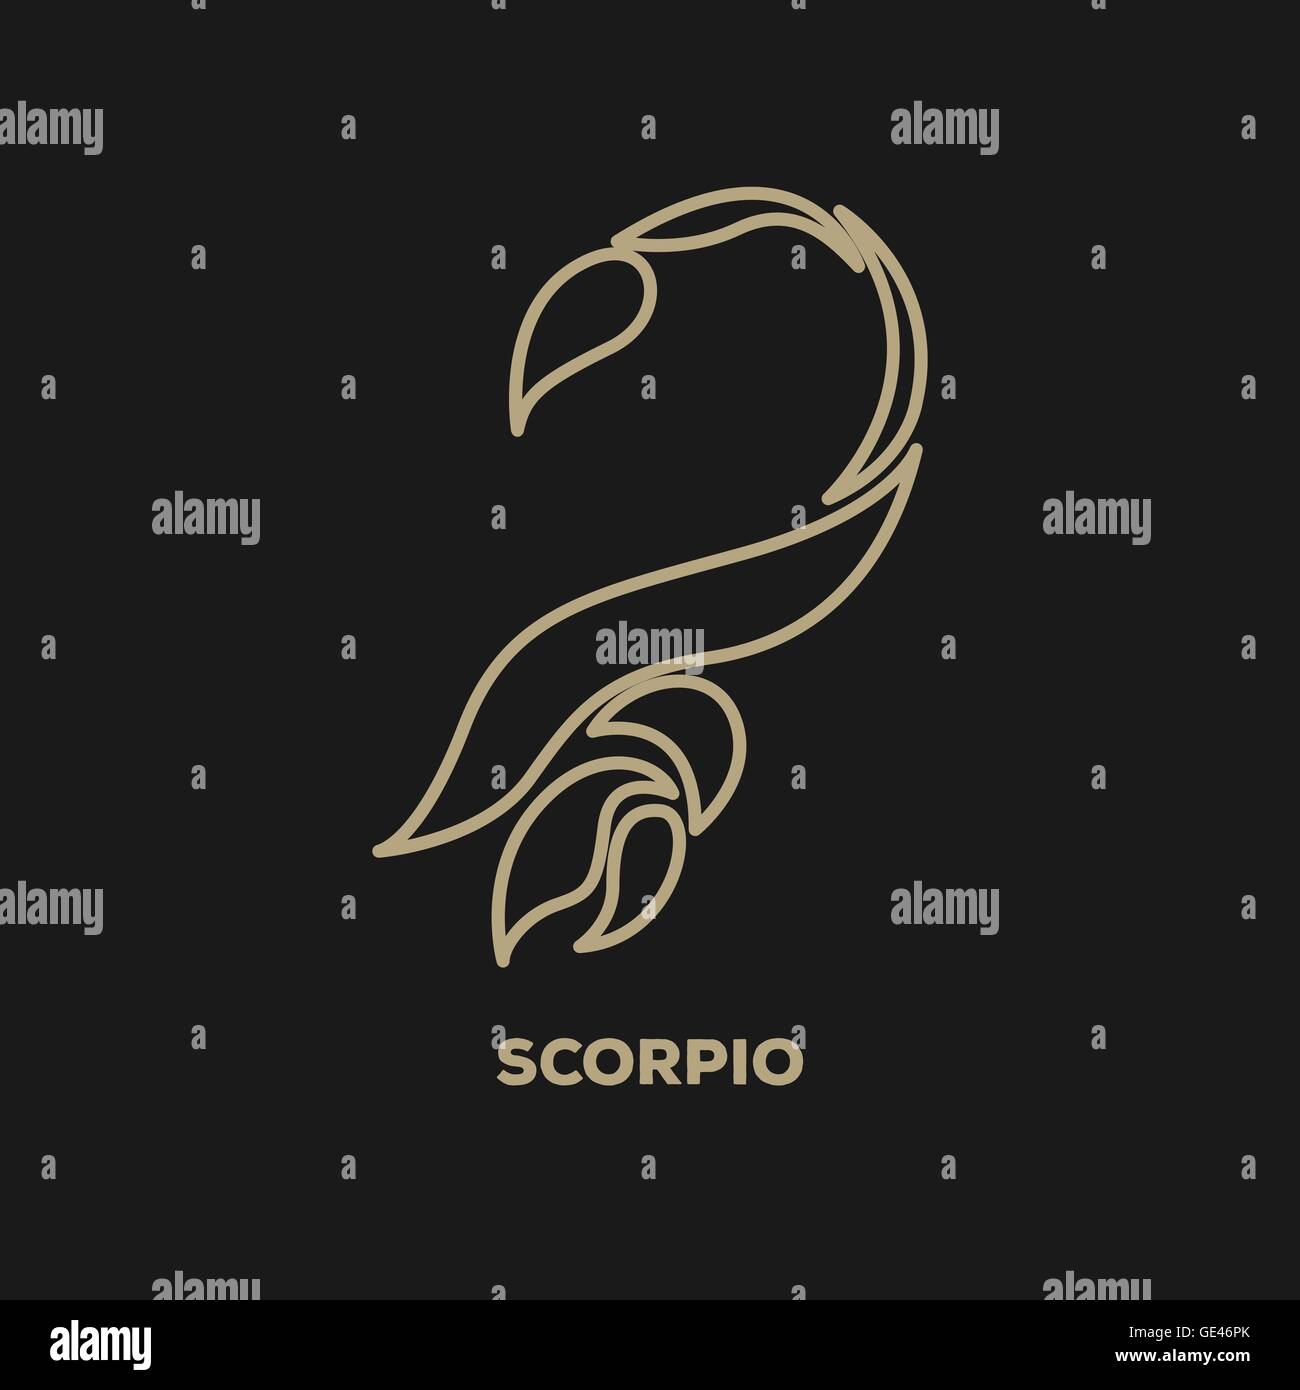 Scorpio logo vector Stock Vector Image & Art - Alamy